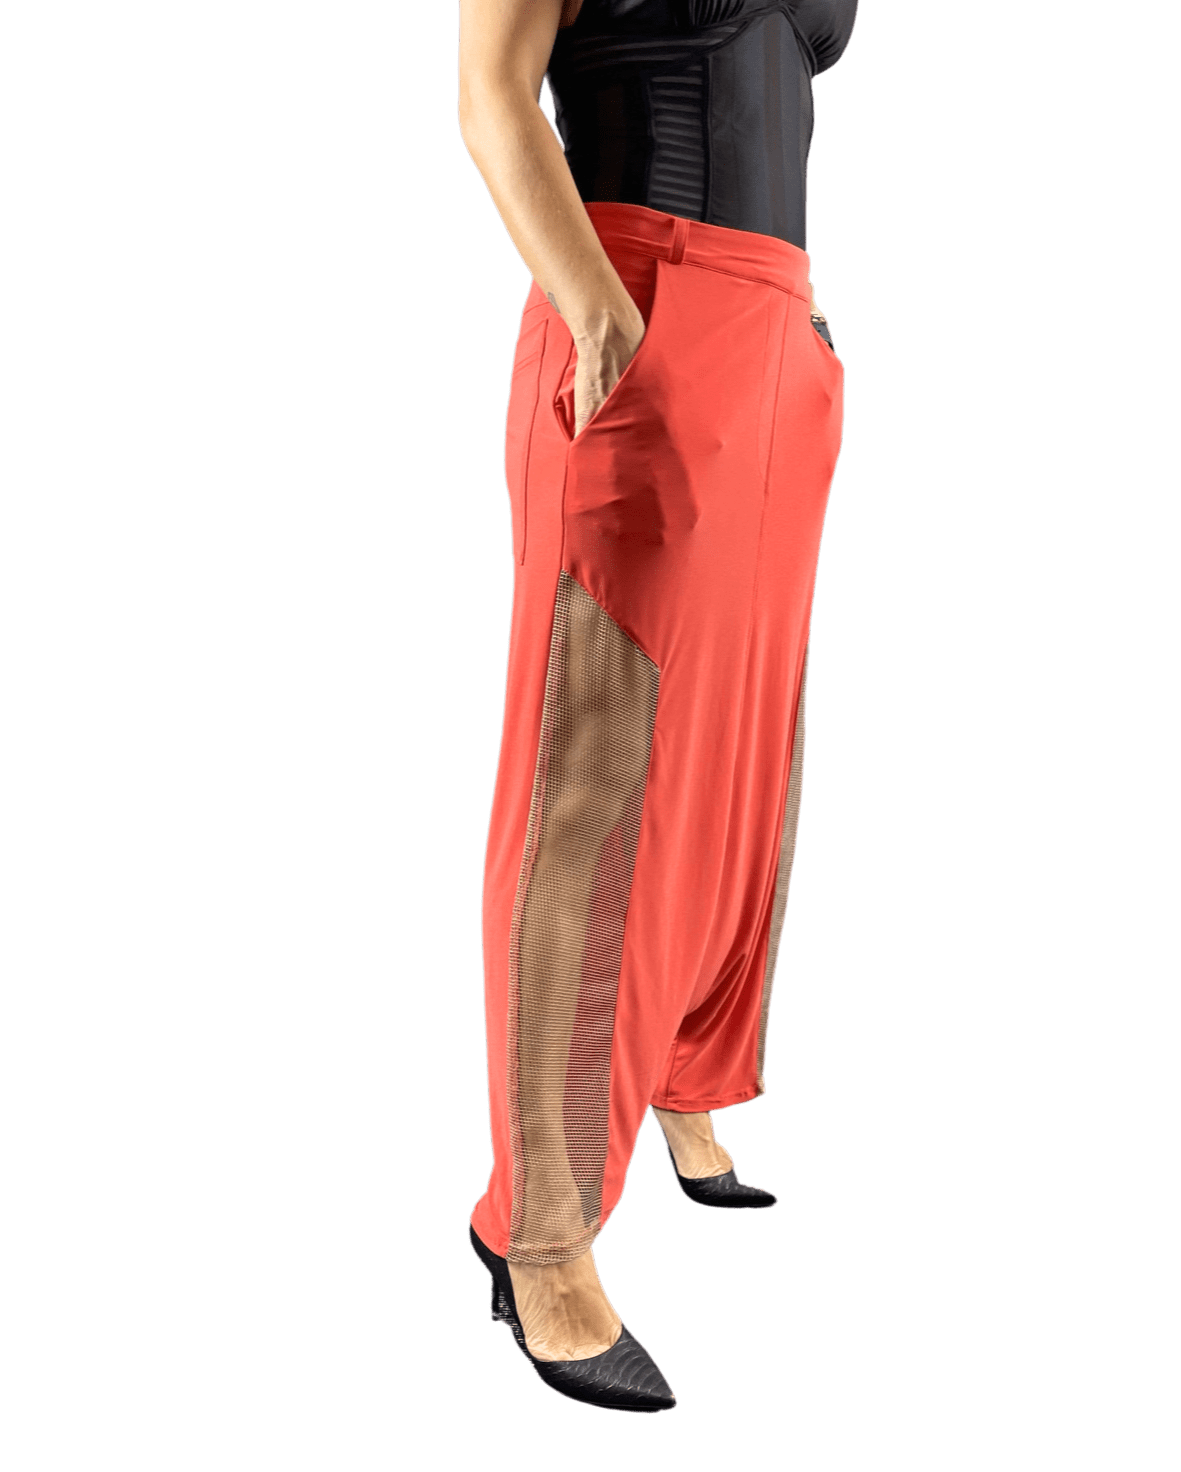 Calça Pantalona Coral MAX SARUEL